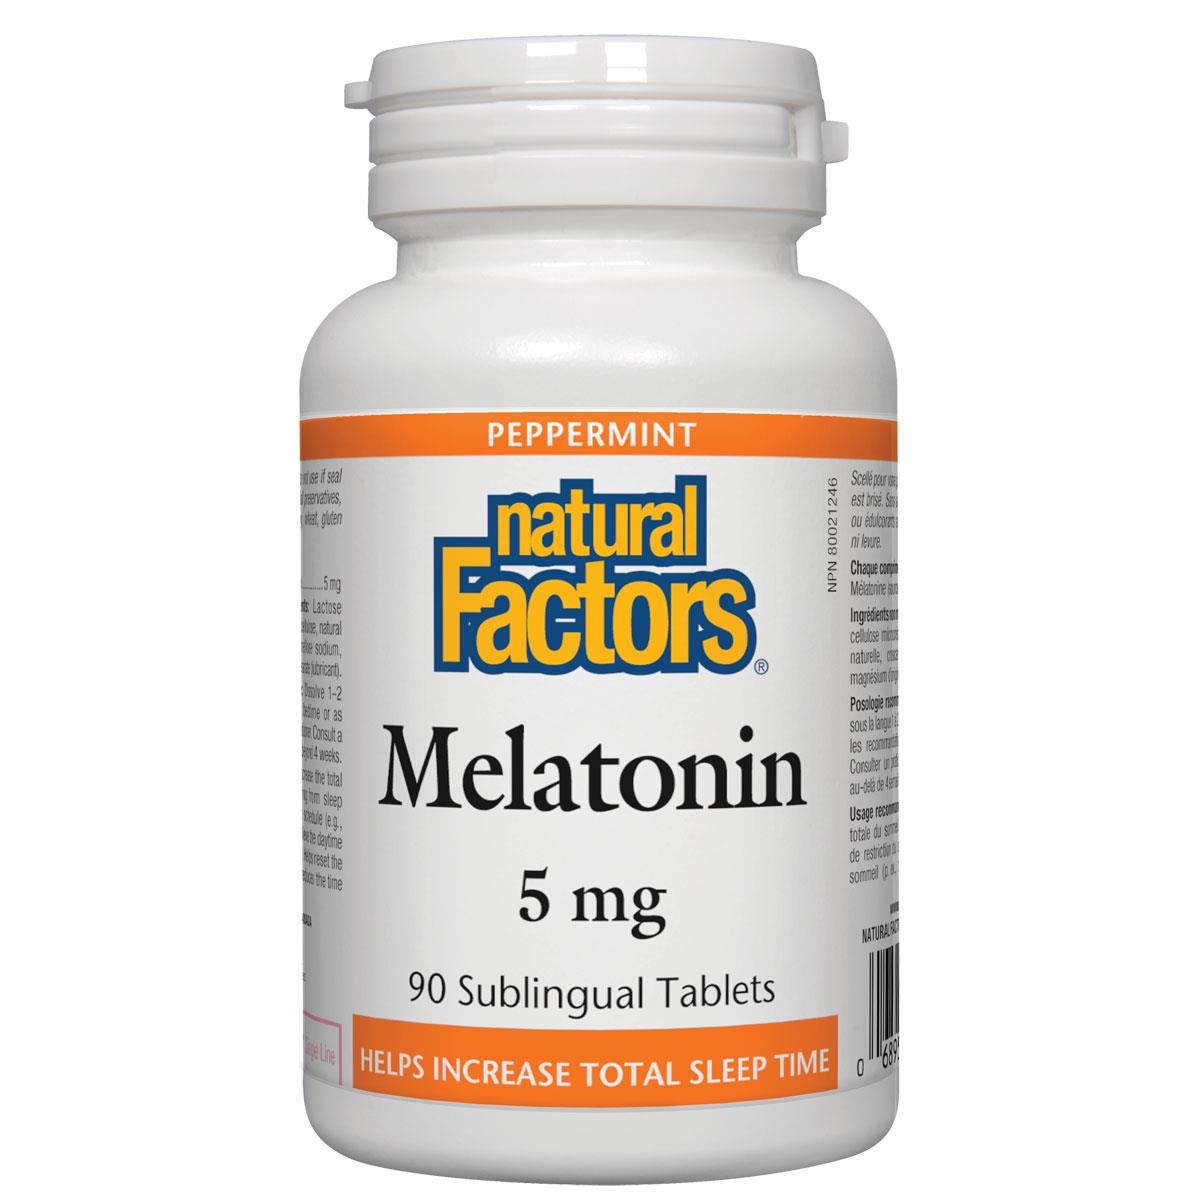 Natural Factors Melatonin (Peppermint), 5mg, 90 Sublingual Tablets